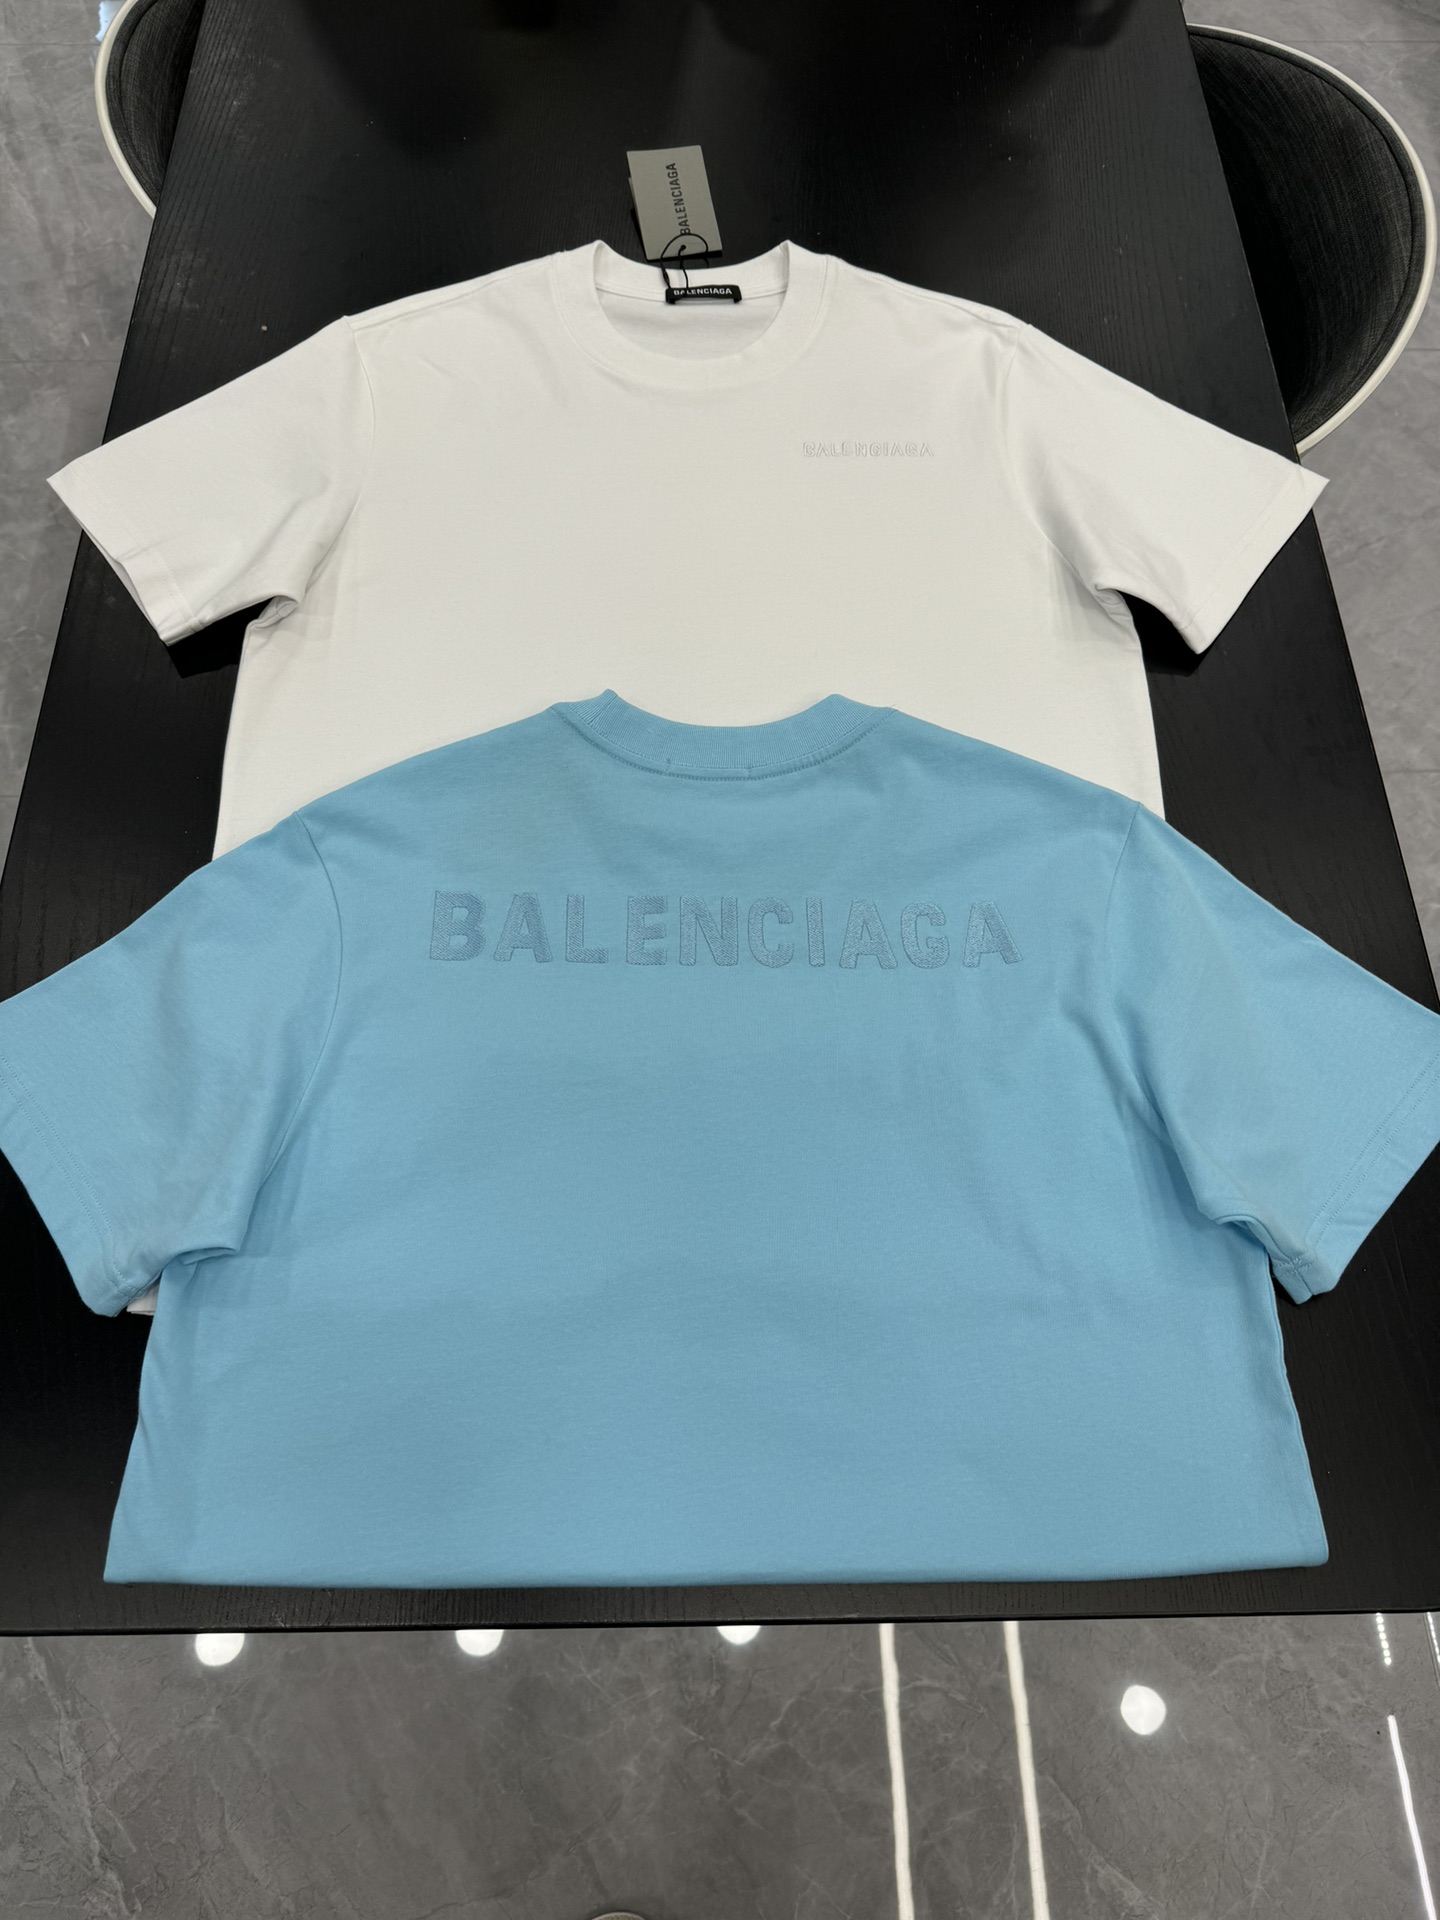 Balenciaga Clothing T-Shirt Black Blue White Men Cotton Vintage Short Sleeve